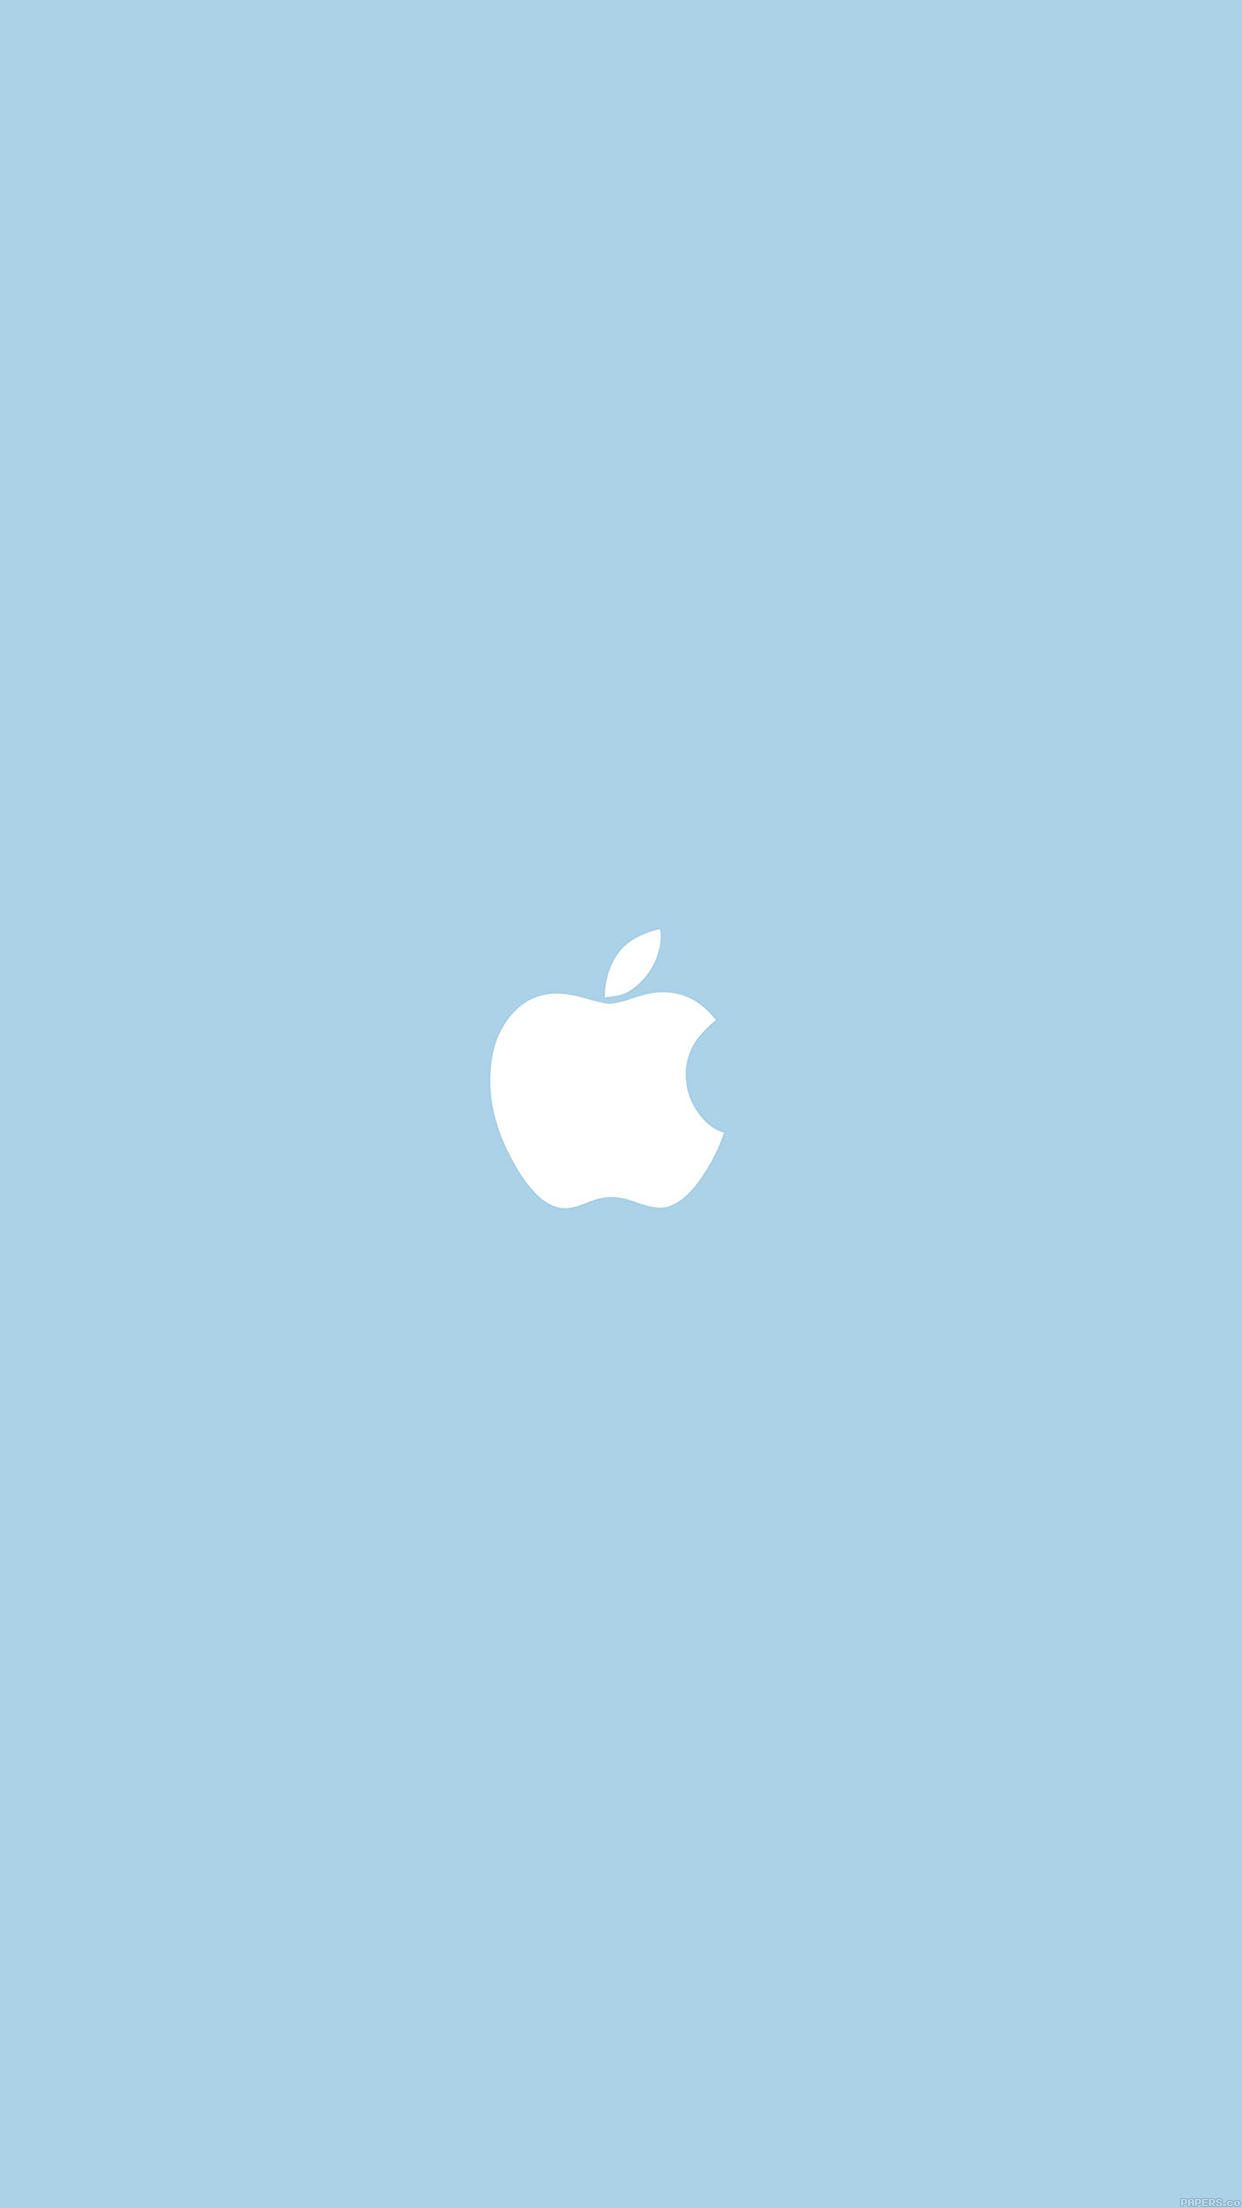 Wallpaper Weekends - Minimalist Apple for the iPhone 6 Plus | MacTrast